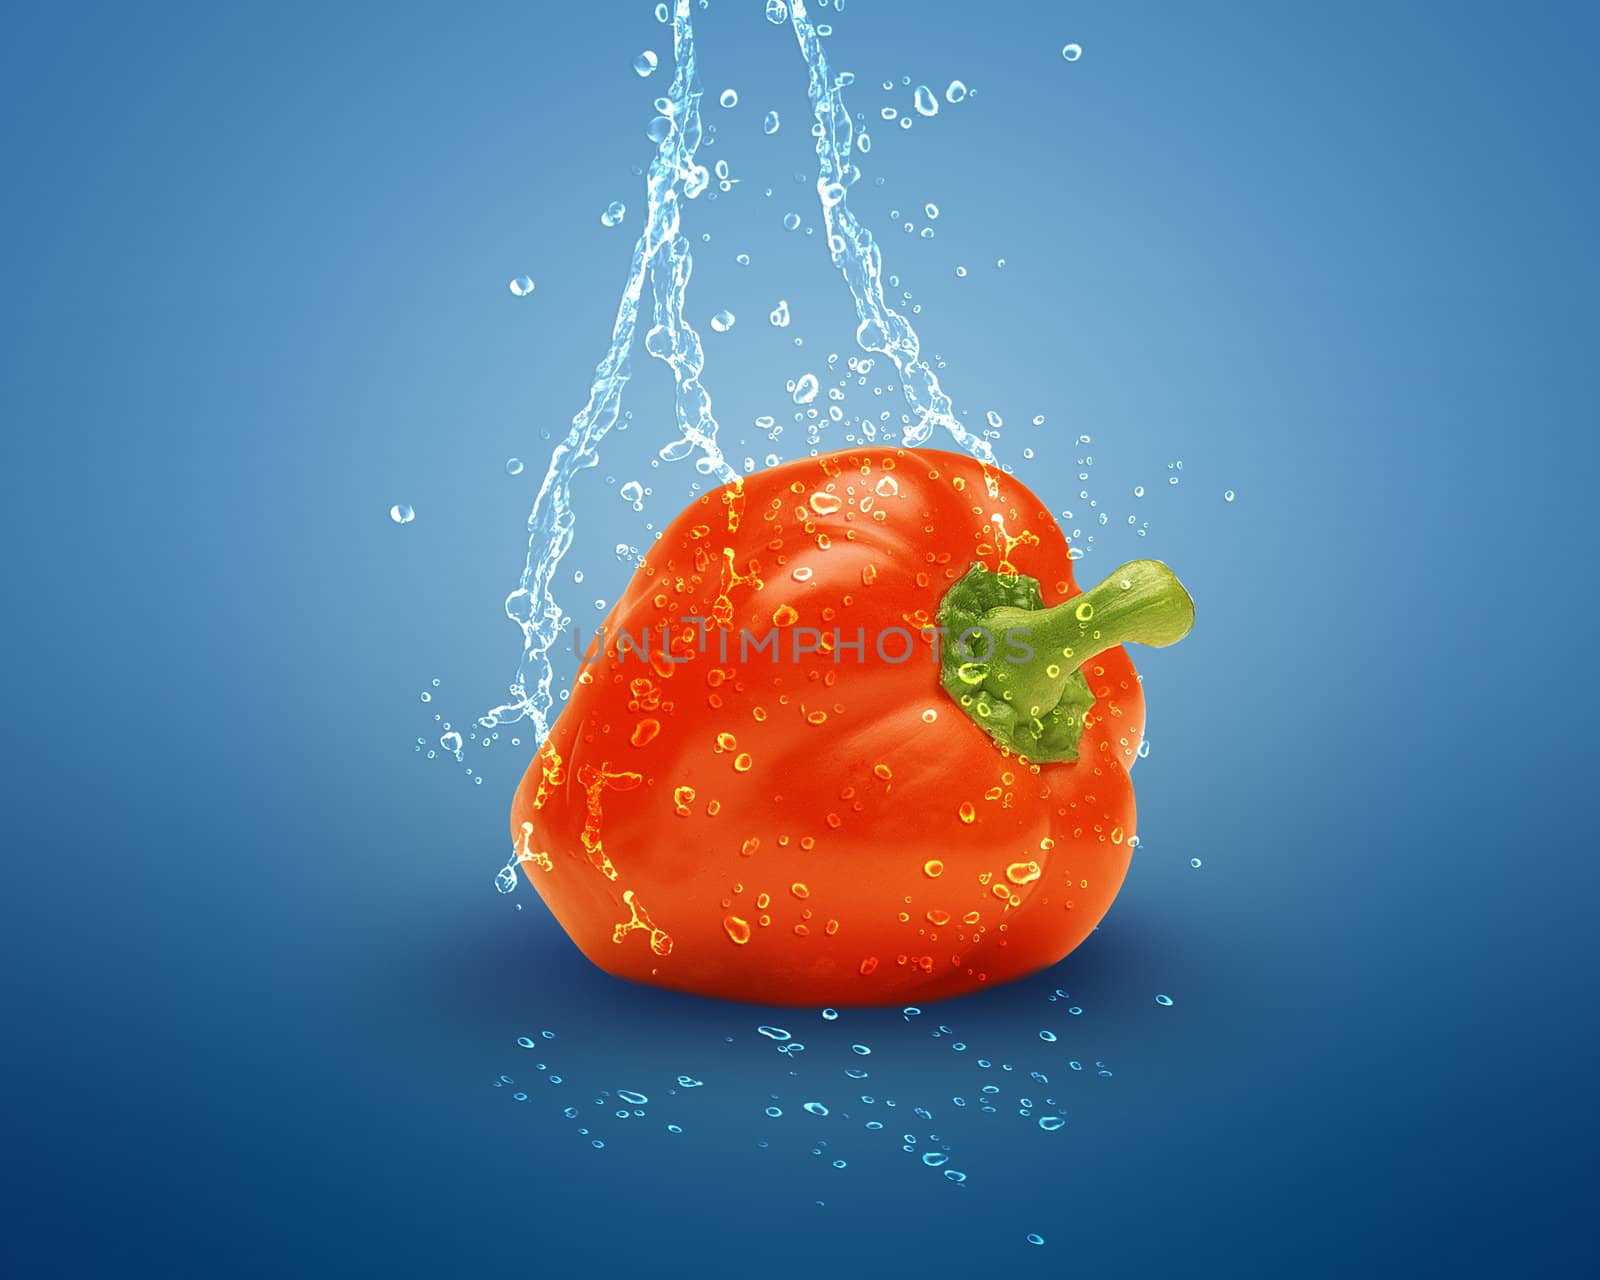 Fresh red bell pepper by designsstock